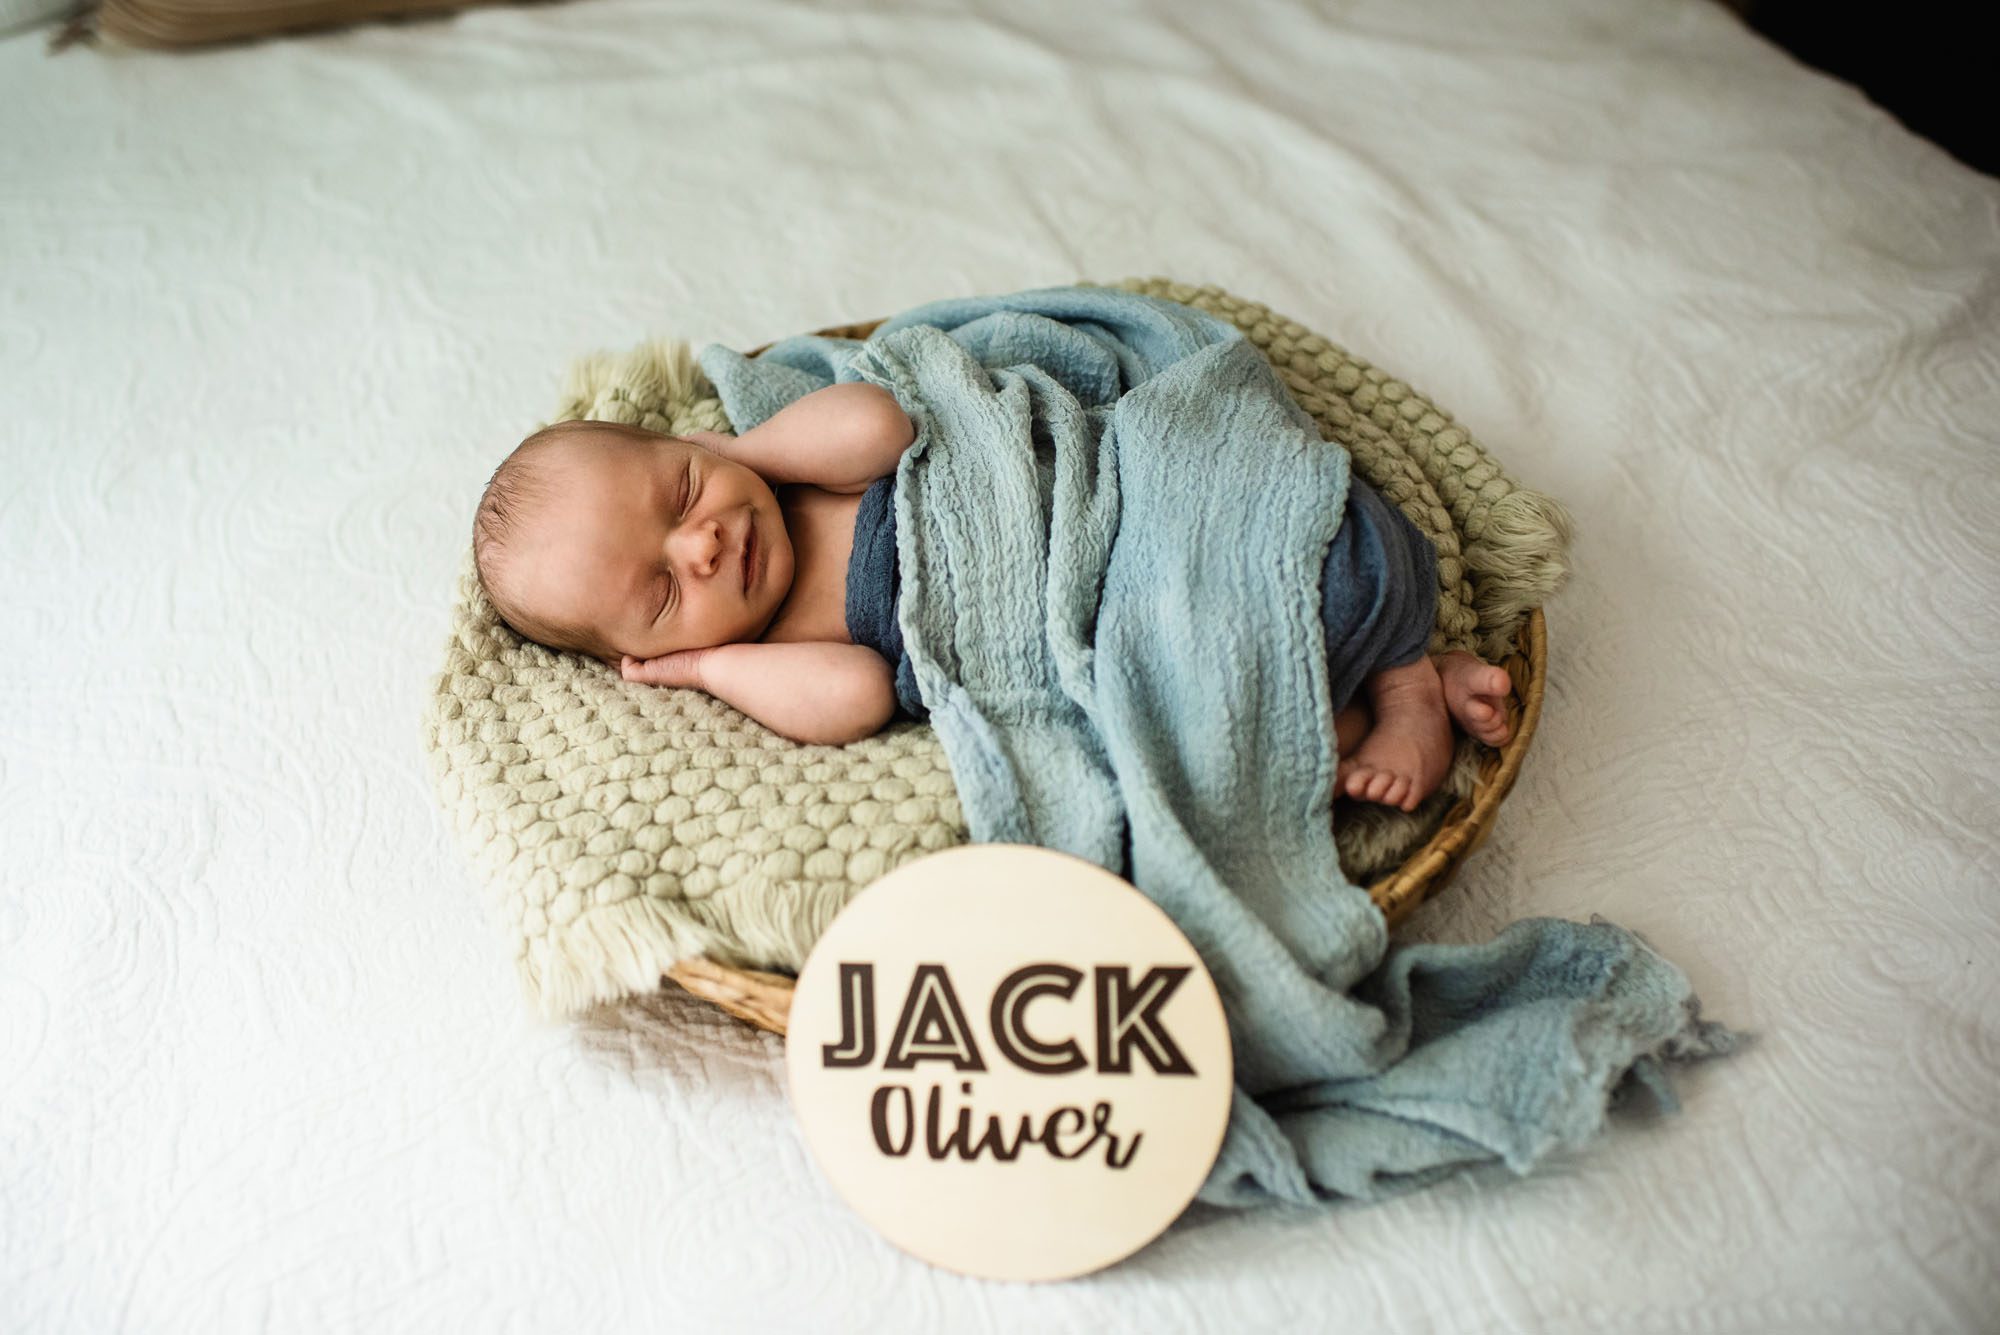 Baby boy posed in basket with blue blankets, San Antonio Newborn Photographer